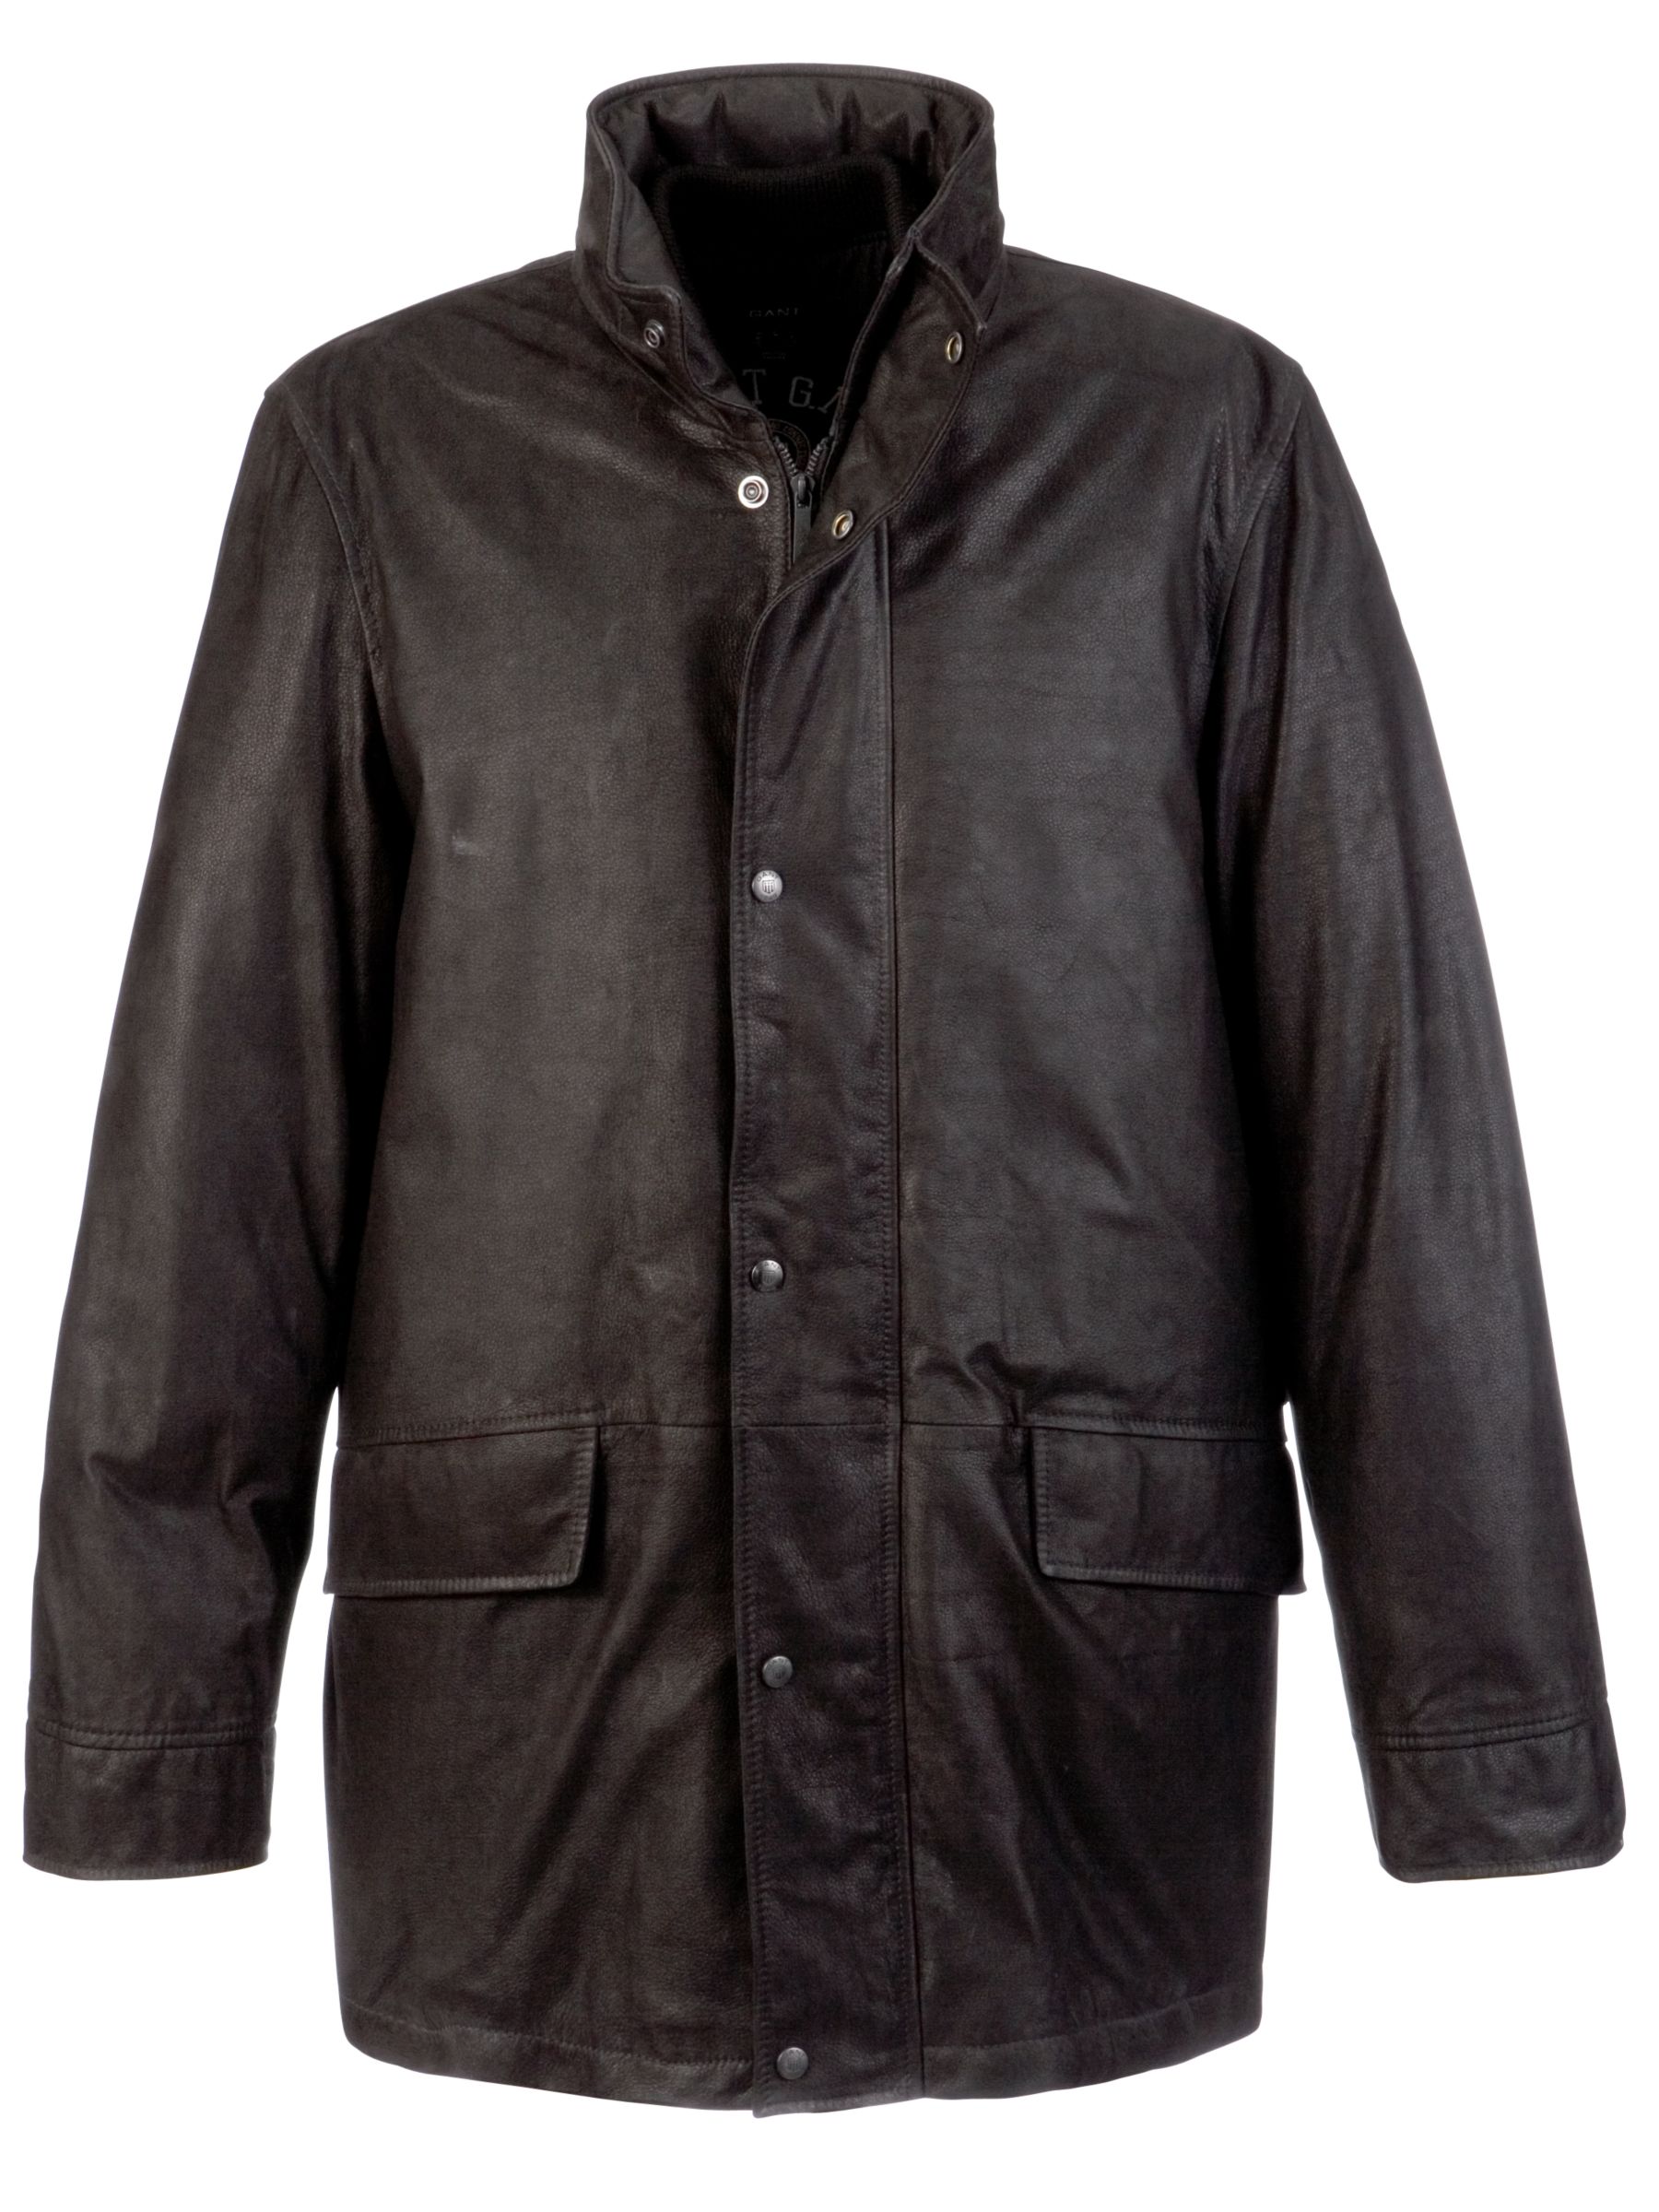 Gant Leather Double Decker Coat, Black at John Lewis